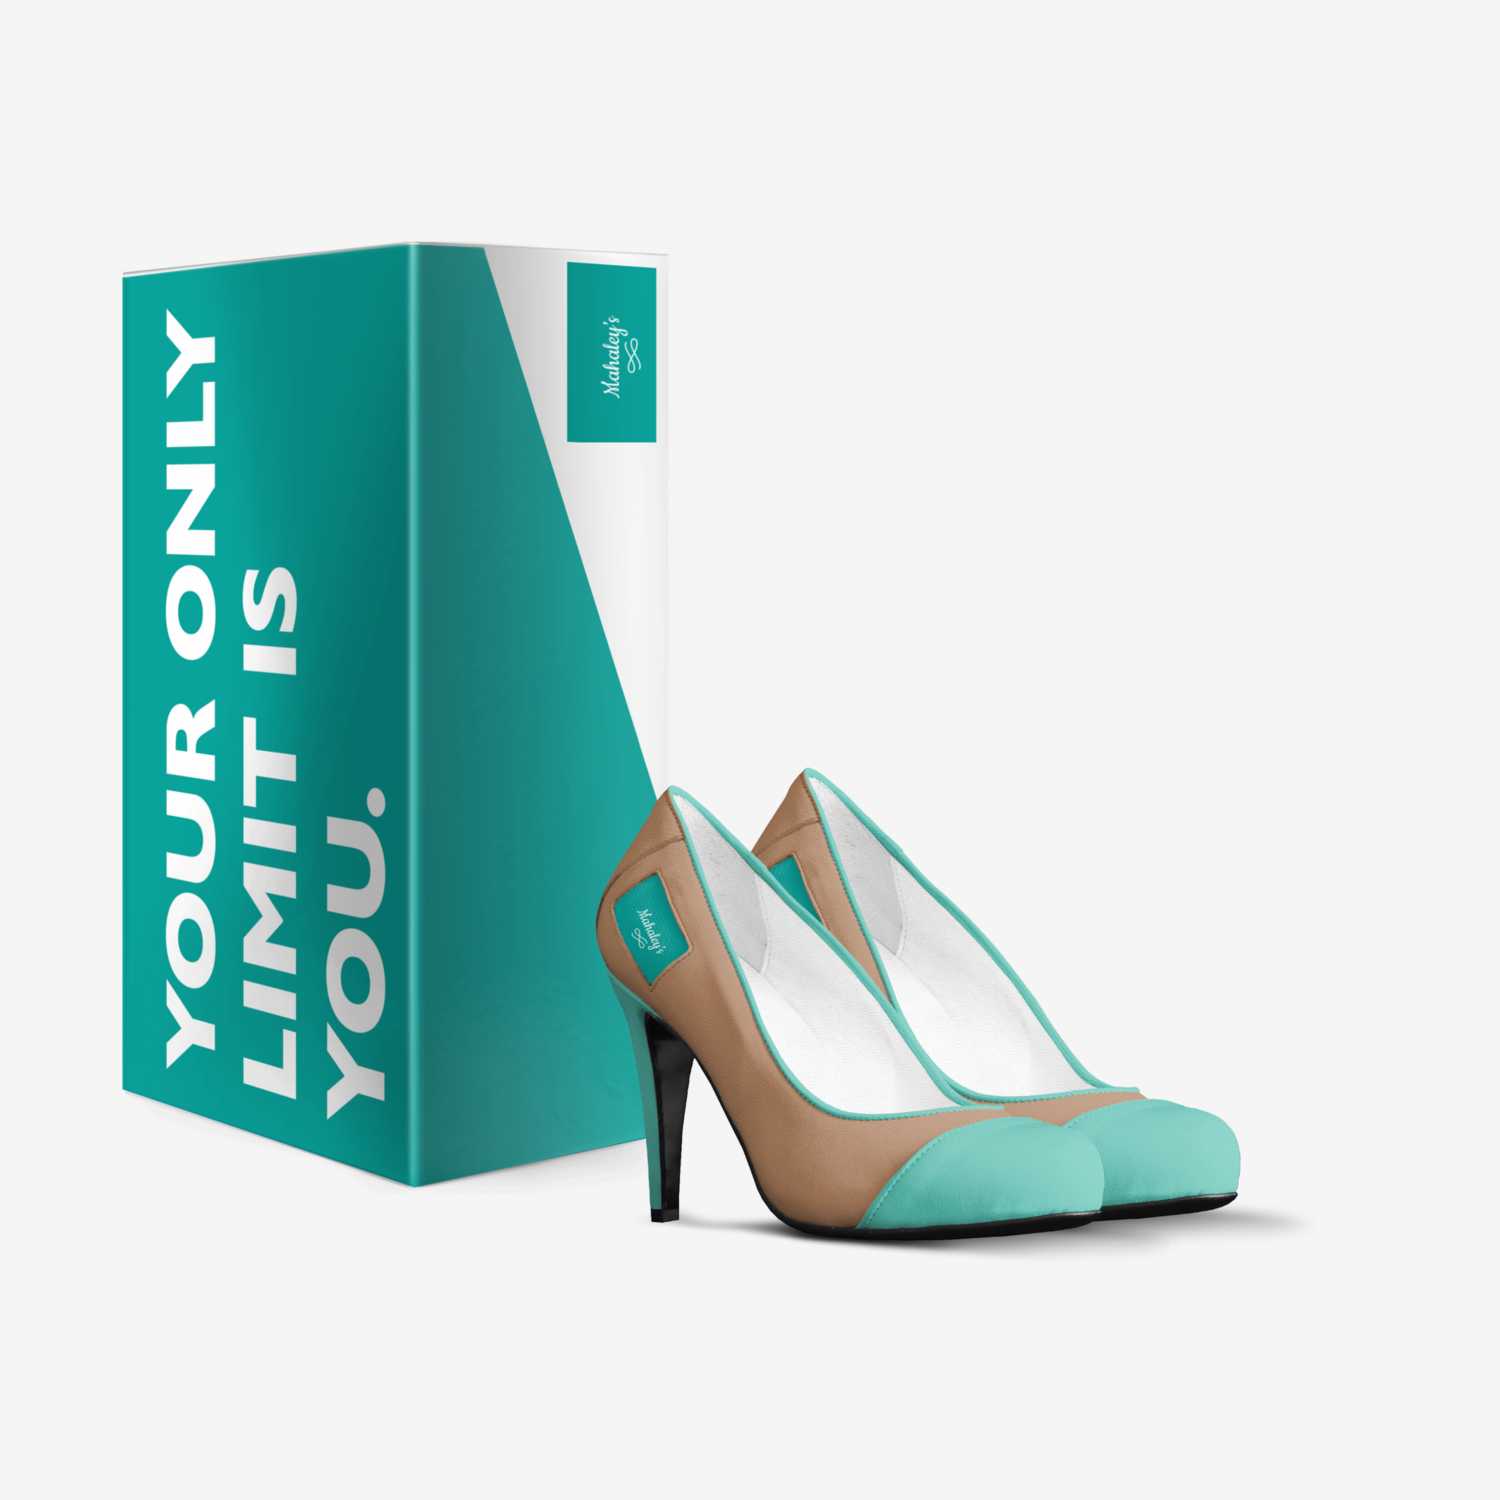 Mahaley's custom made in Italy shoes by Simoura Mahaley | Box view